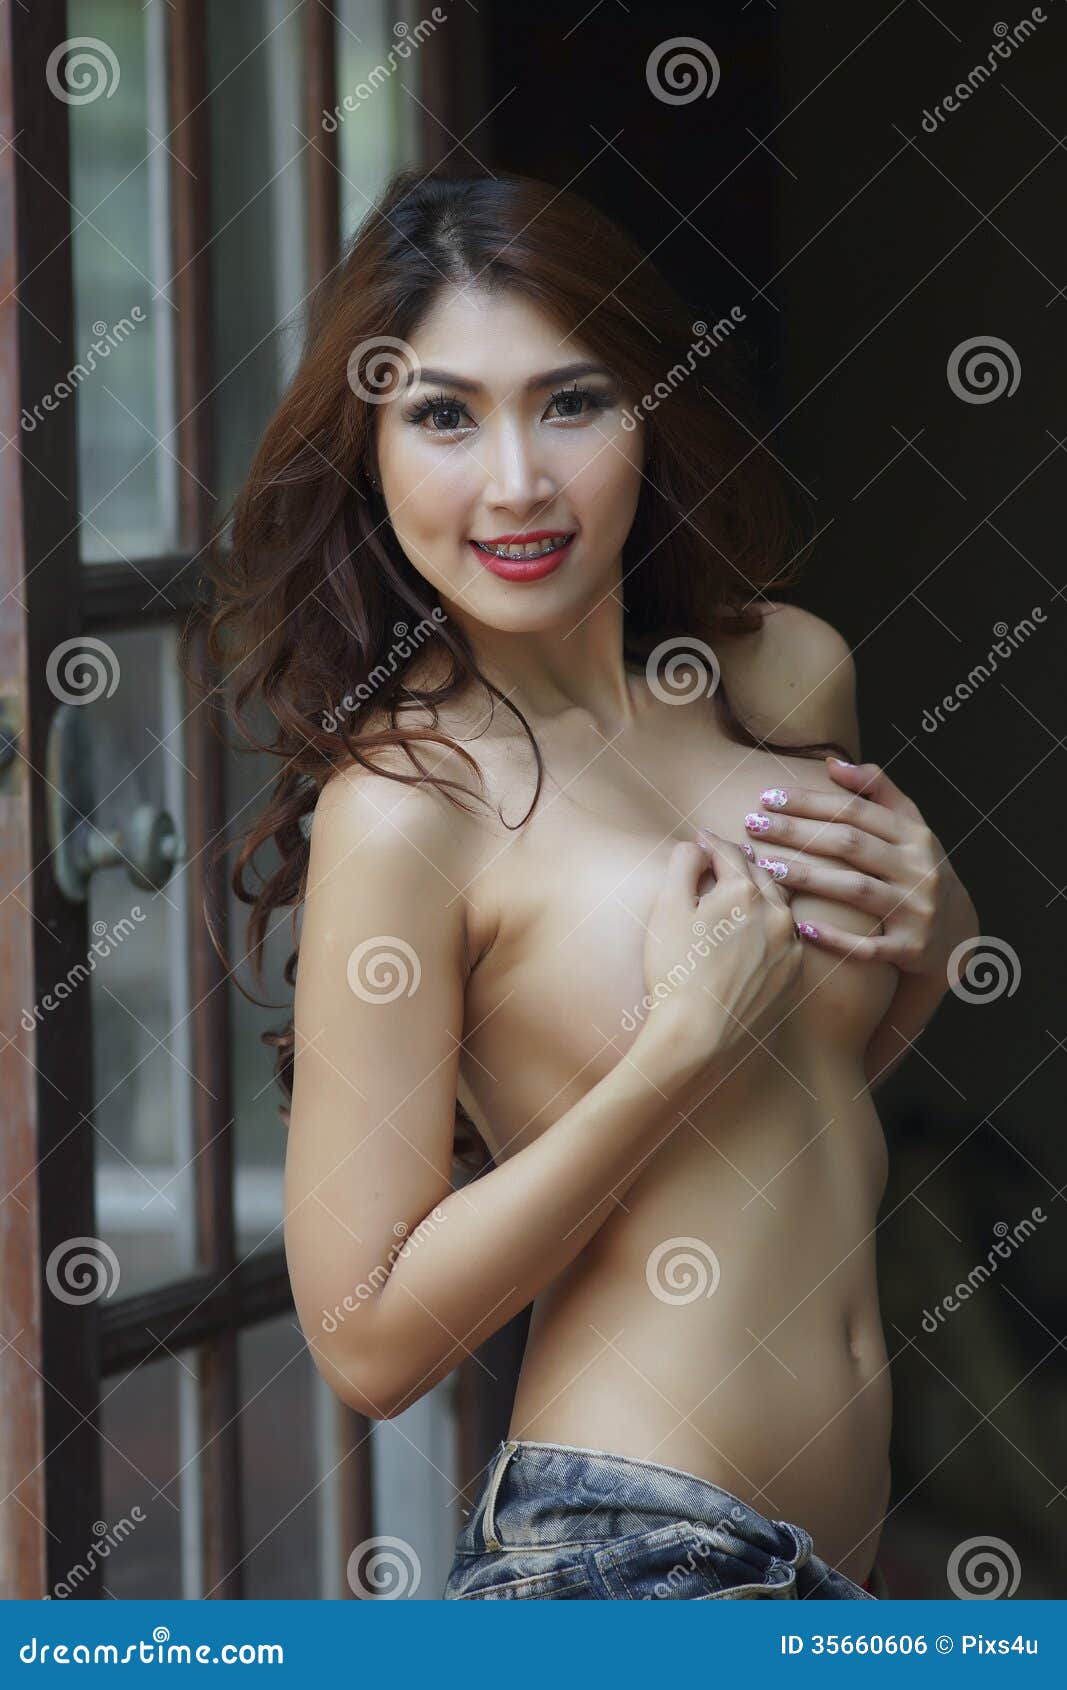 Hot sexy asian girls topless